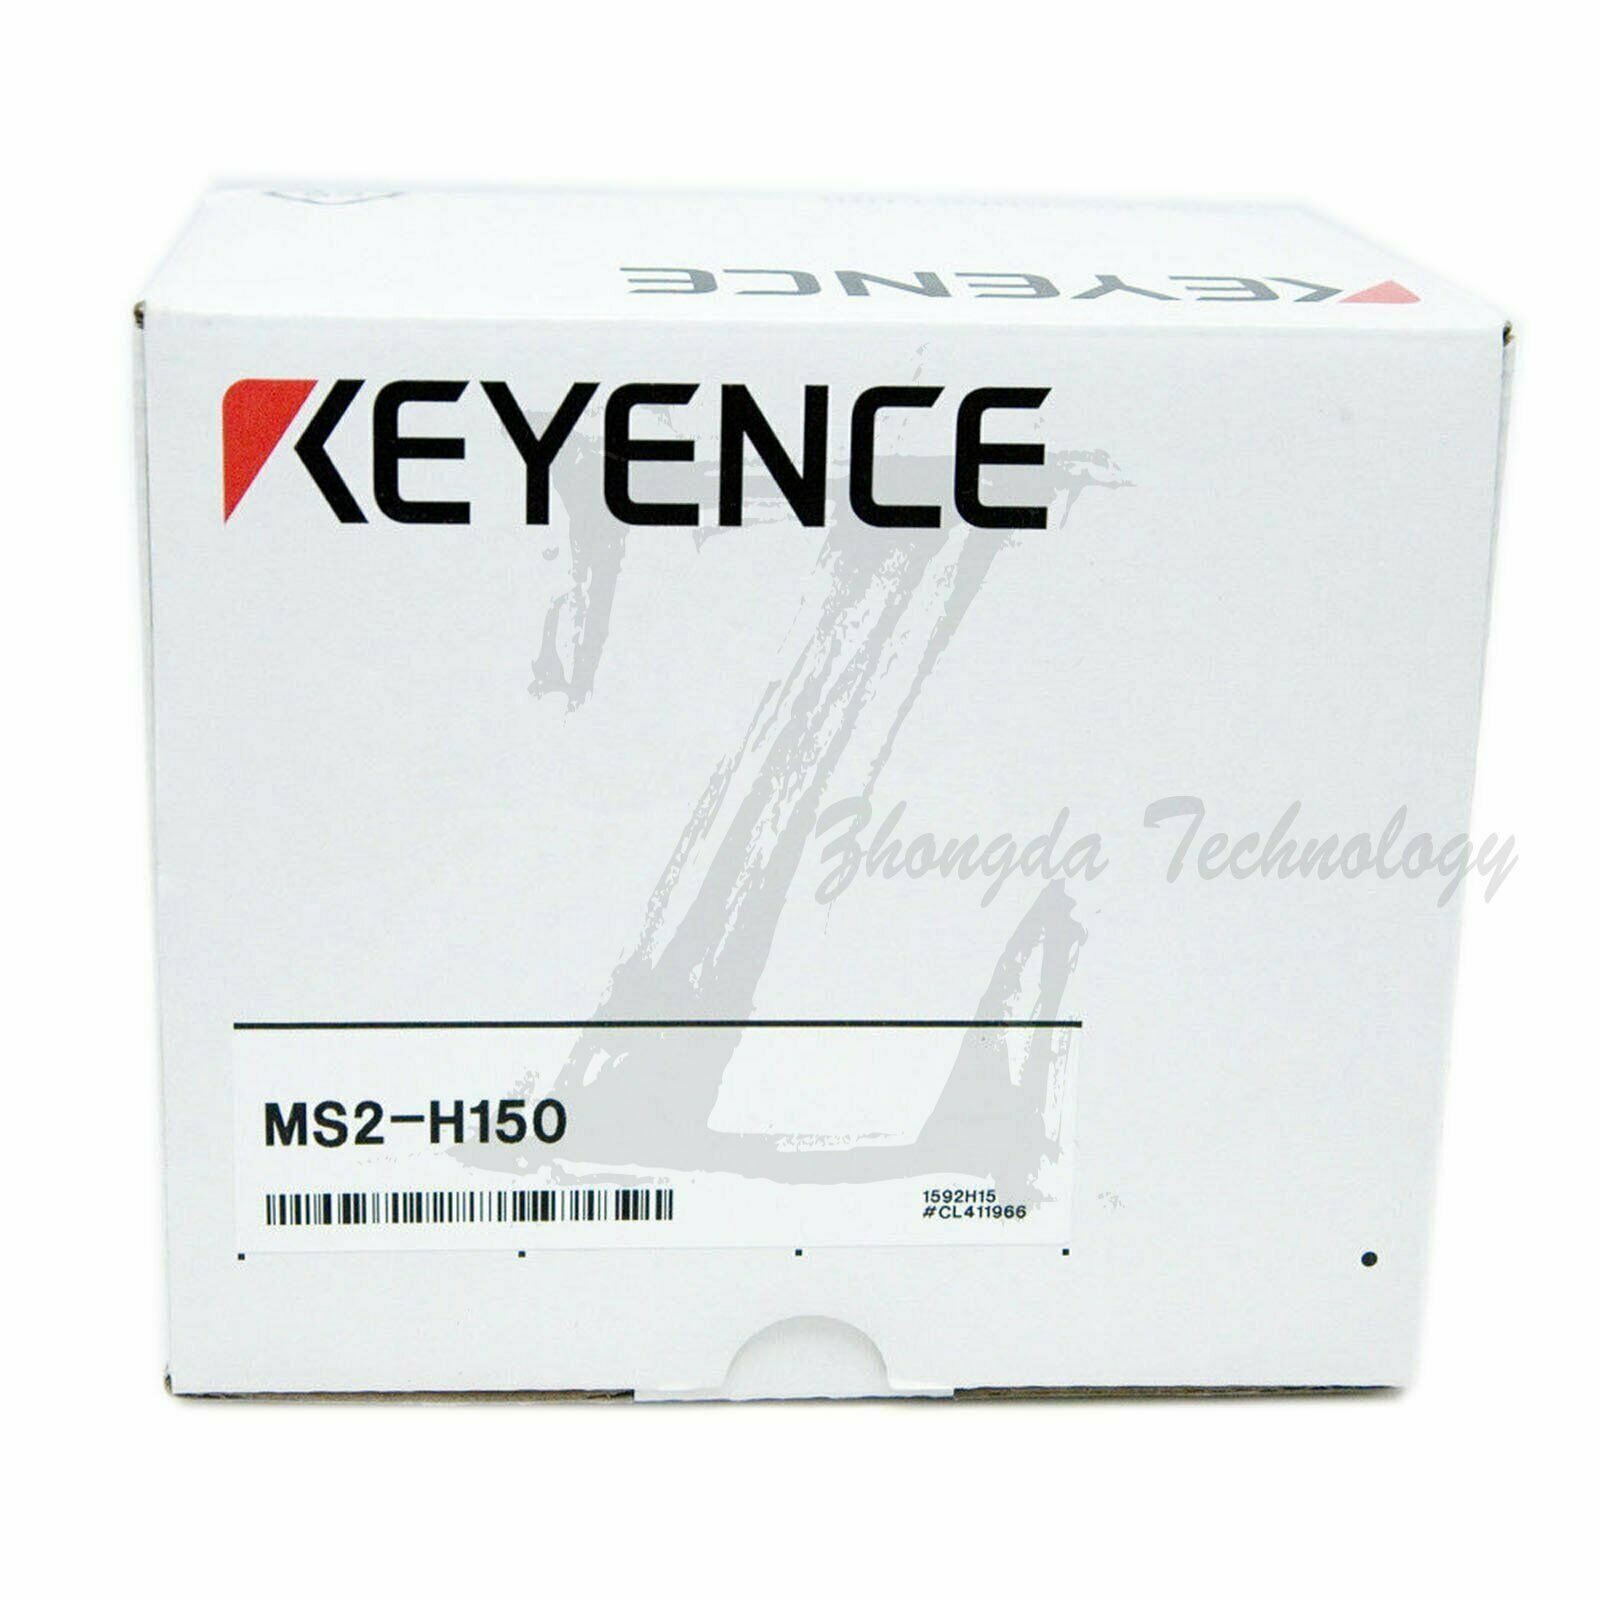 1pcs NEW KEYENCE MS2-H150 Switching power supply KOEED 201-500, 90%, import_2020_10_10_031751, Keyence, Other, validate-product-description